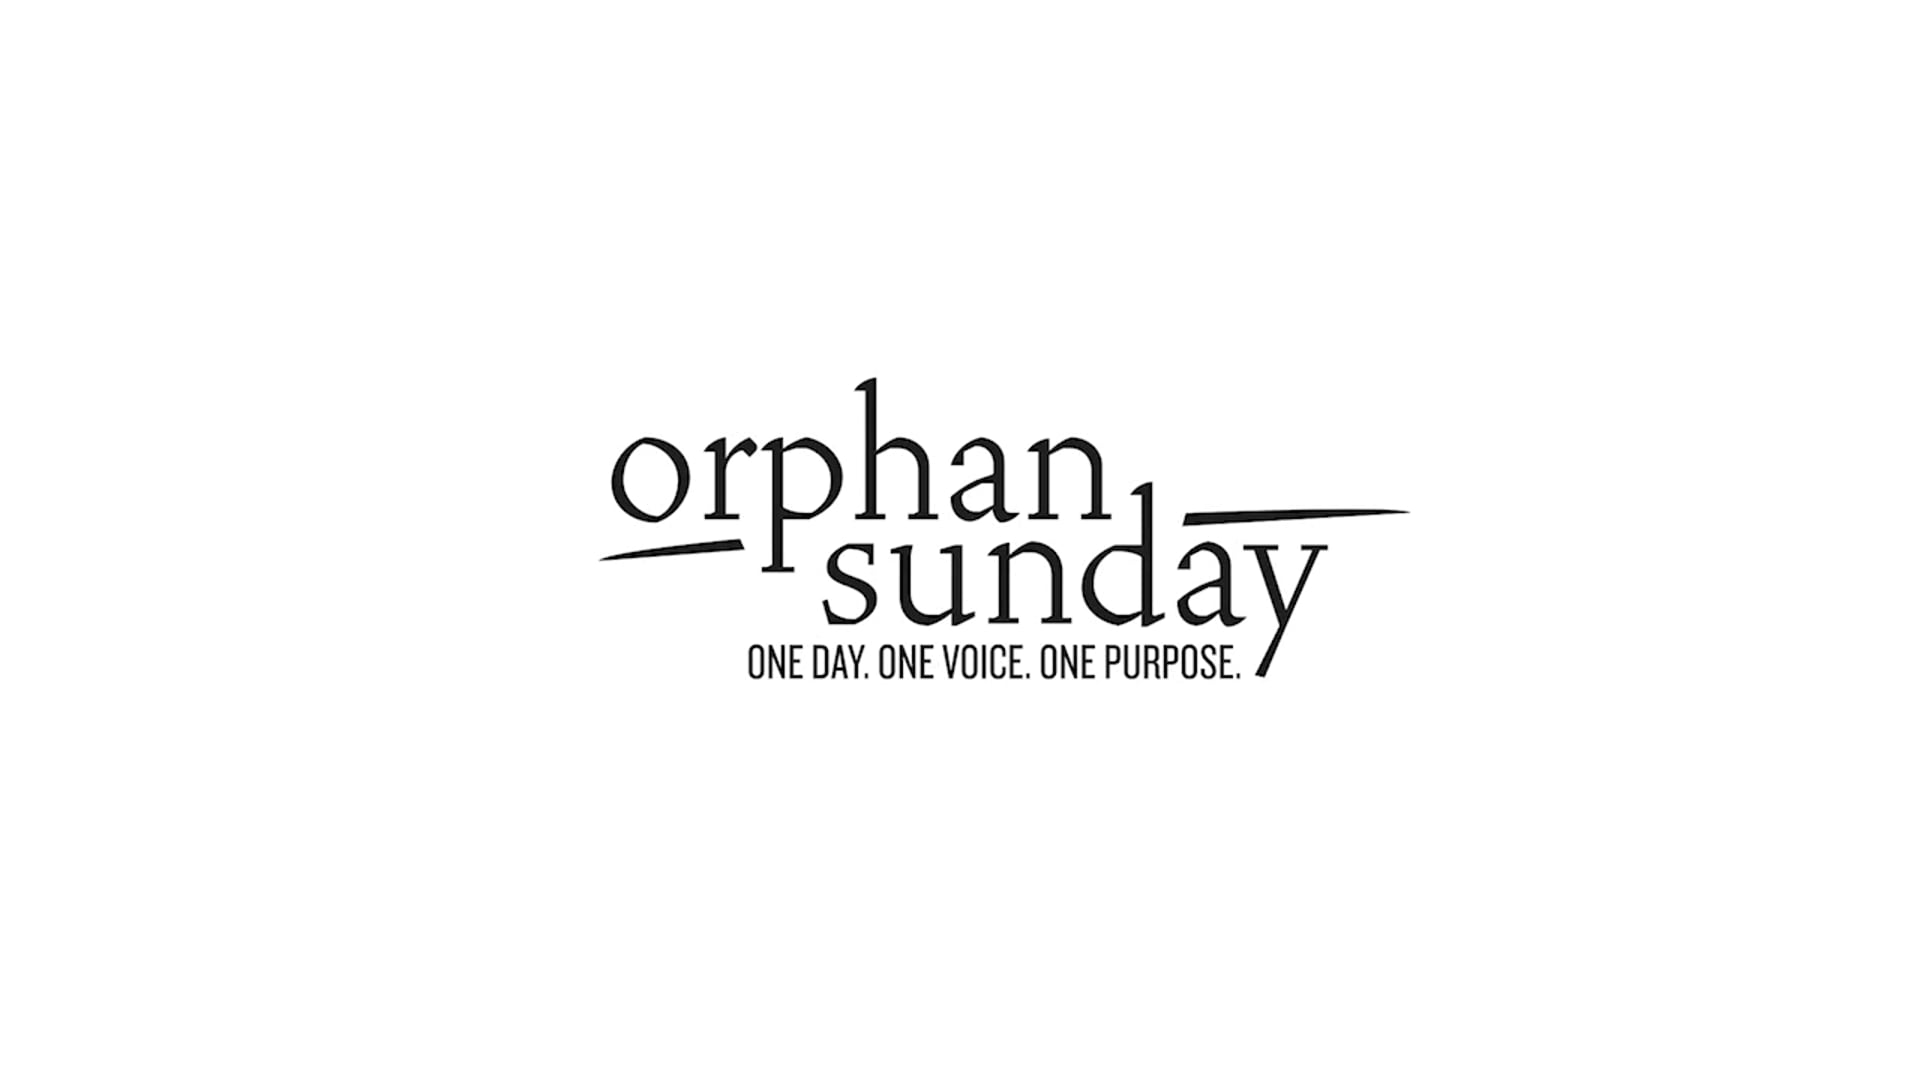 Orphan Sunday, Gary Schneider